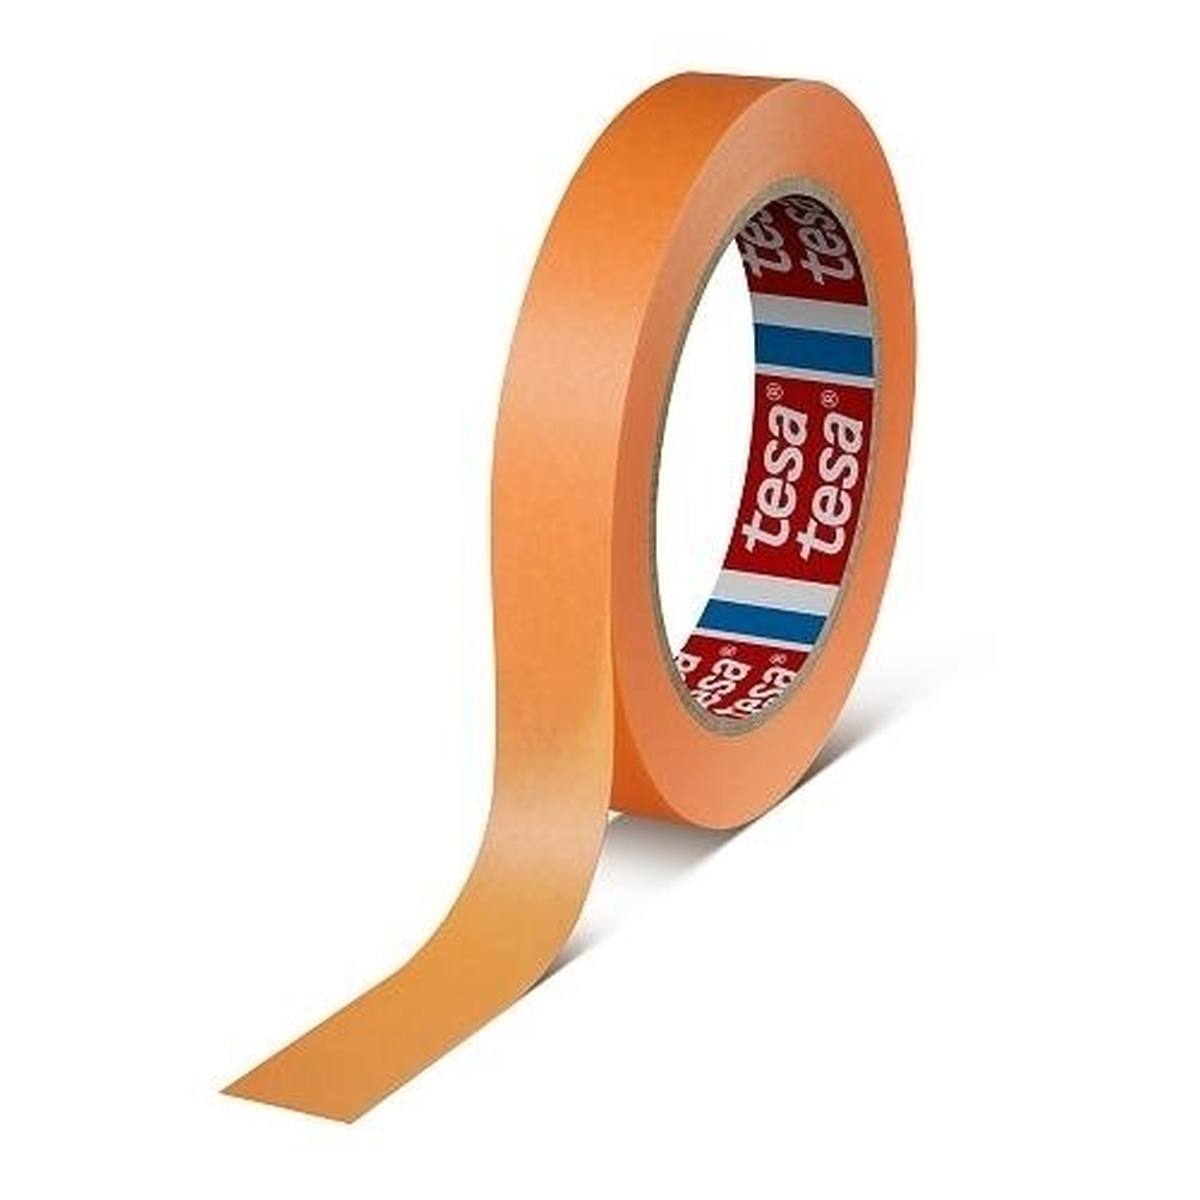 Tesakrepp 4342 Precision crepe washi tape 38mmx50m orange